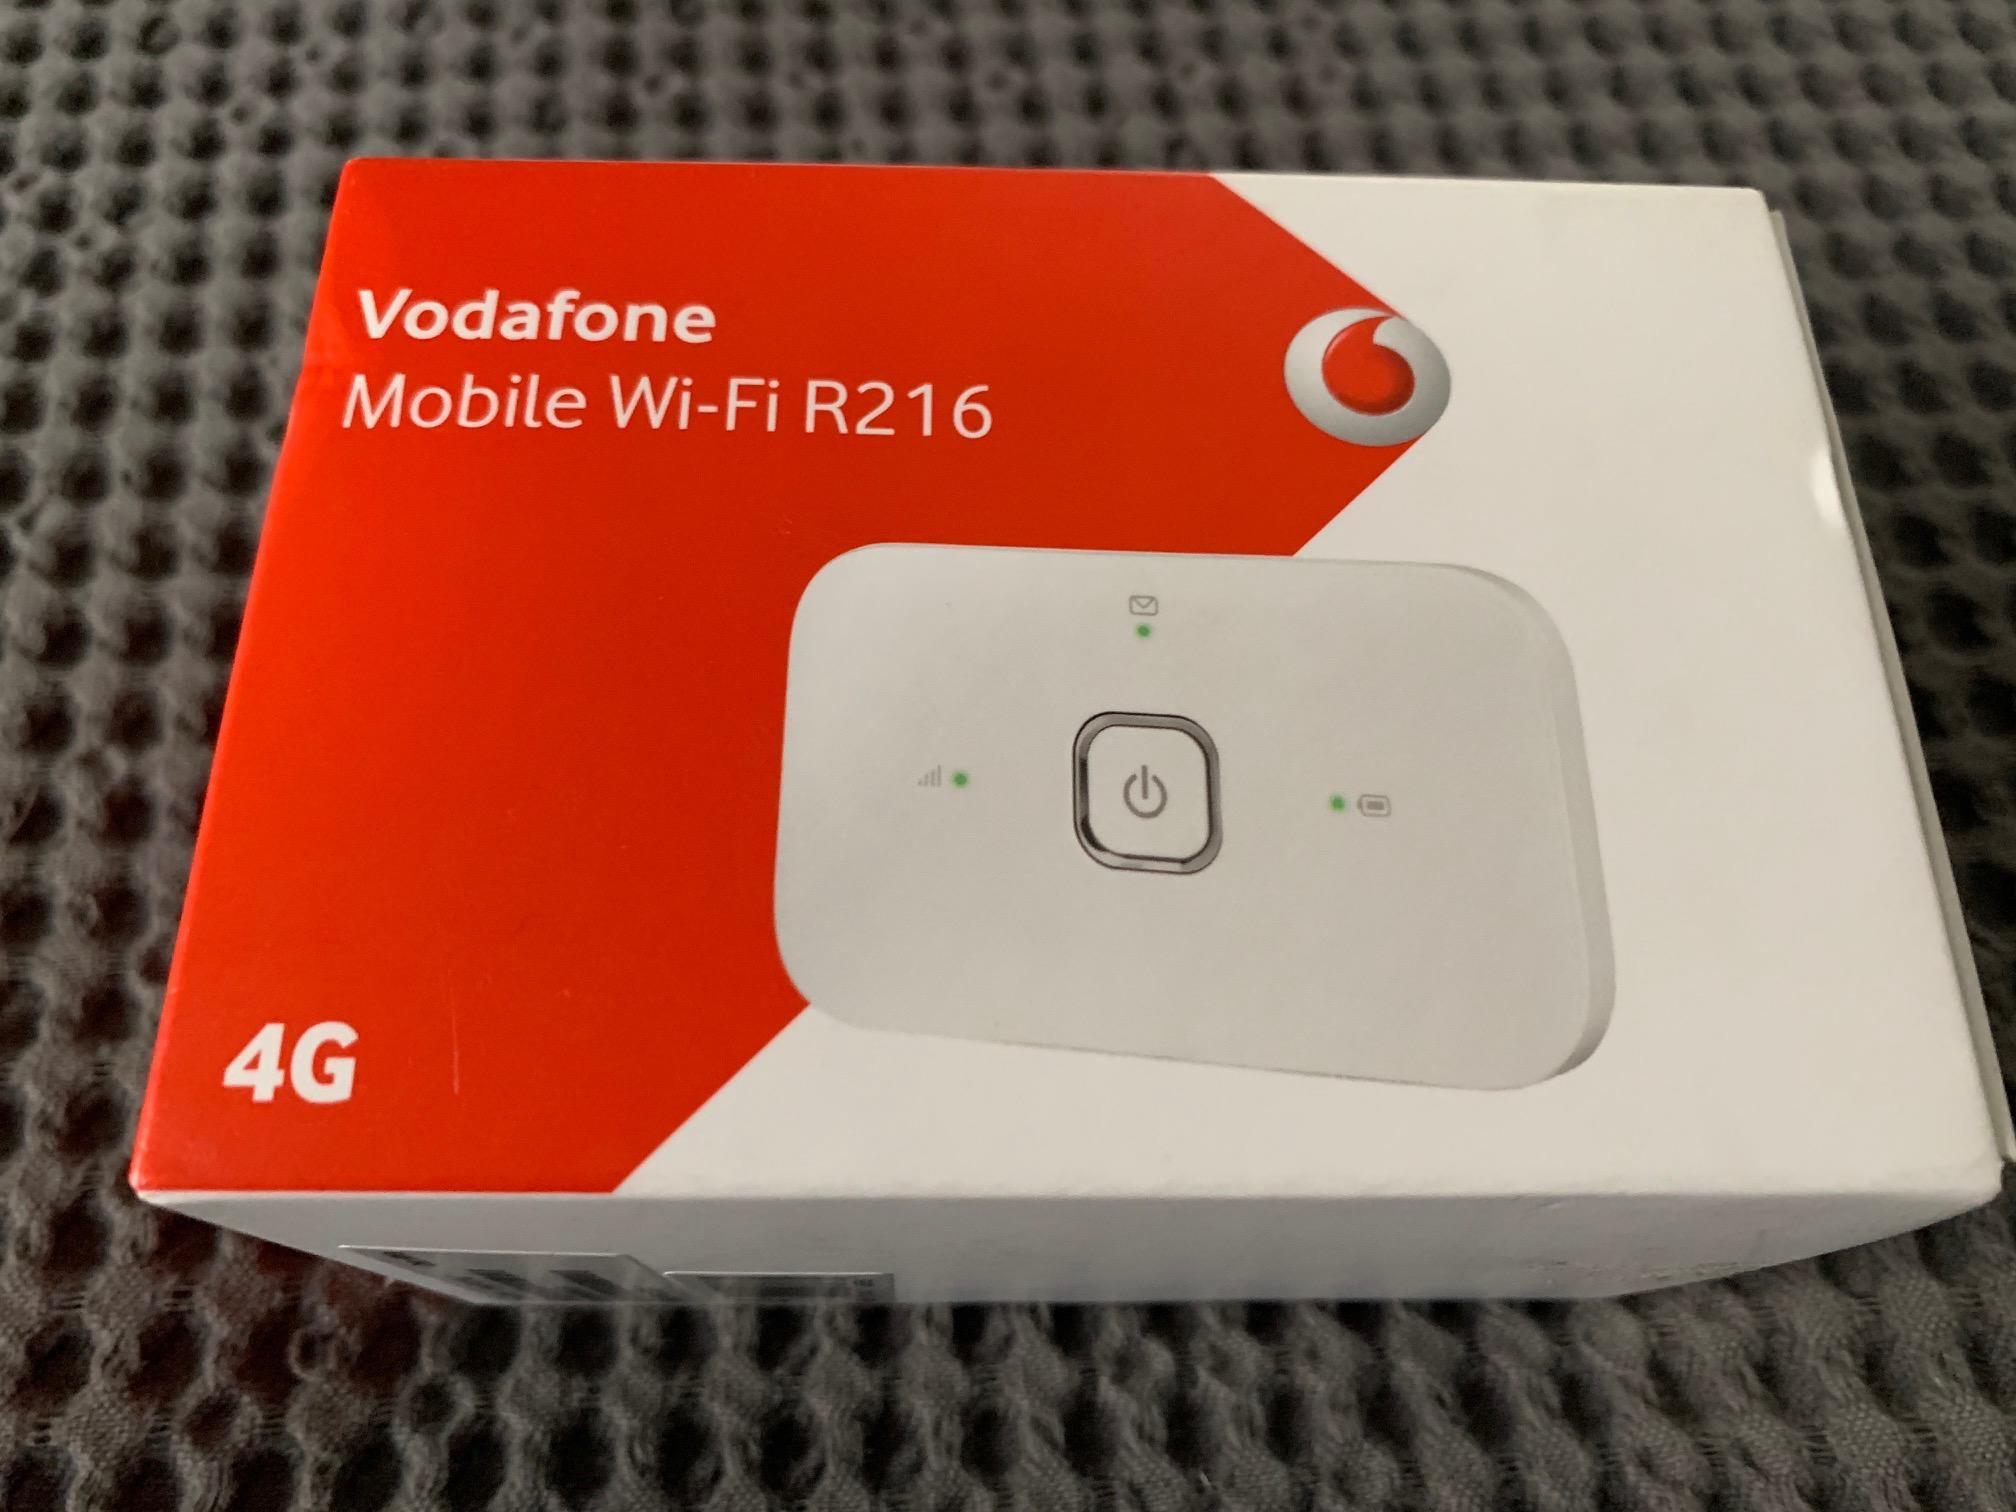 vodafone mobile broadband router